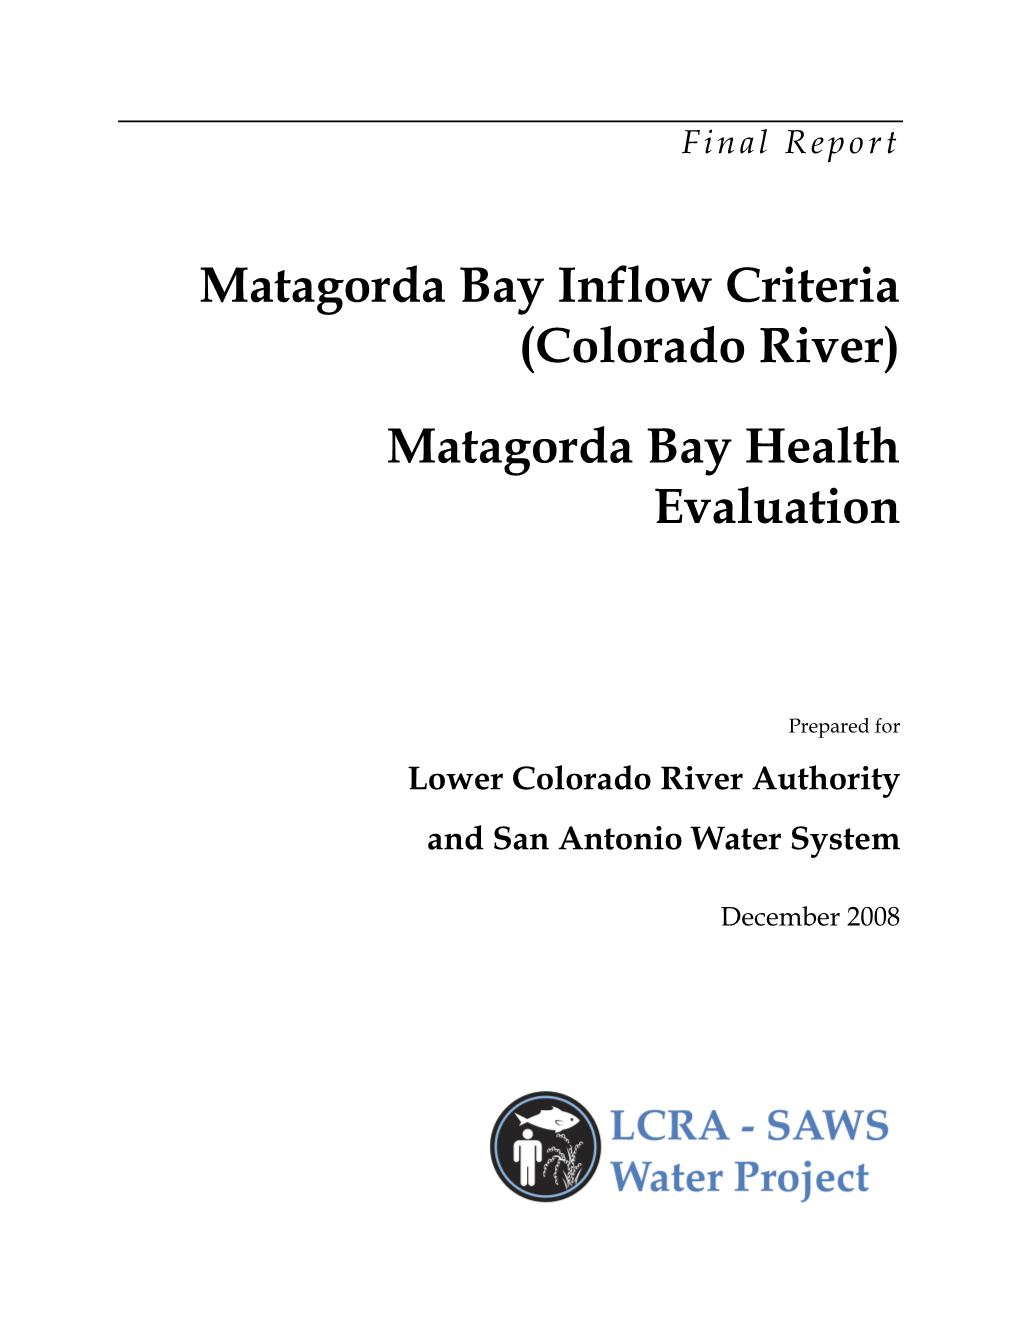 Matagorda Bay Inflow Criteria (Colorado River)